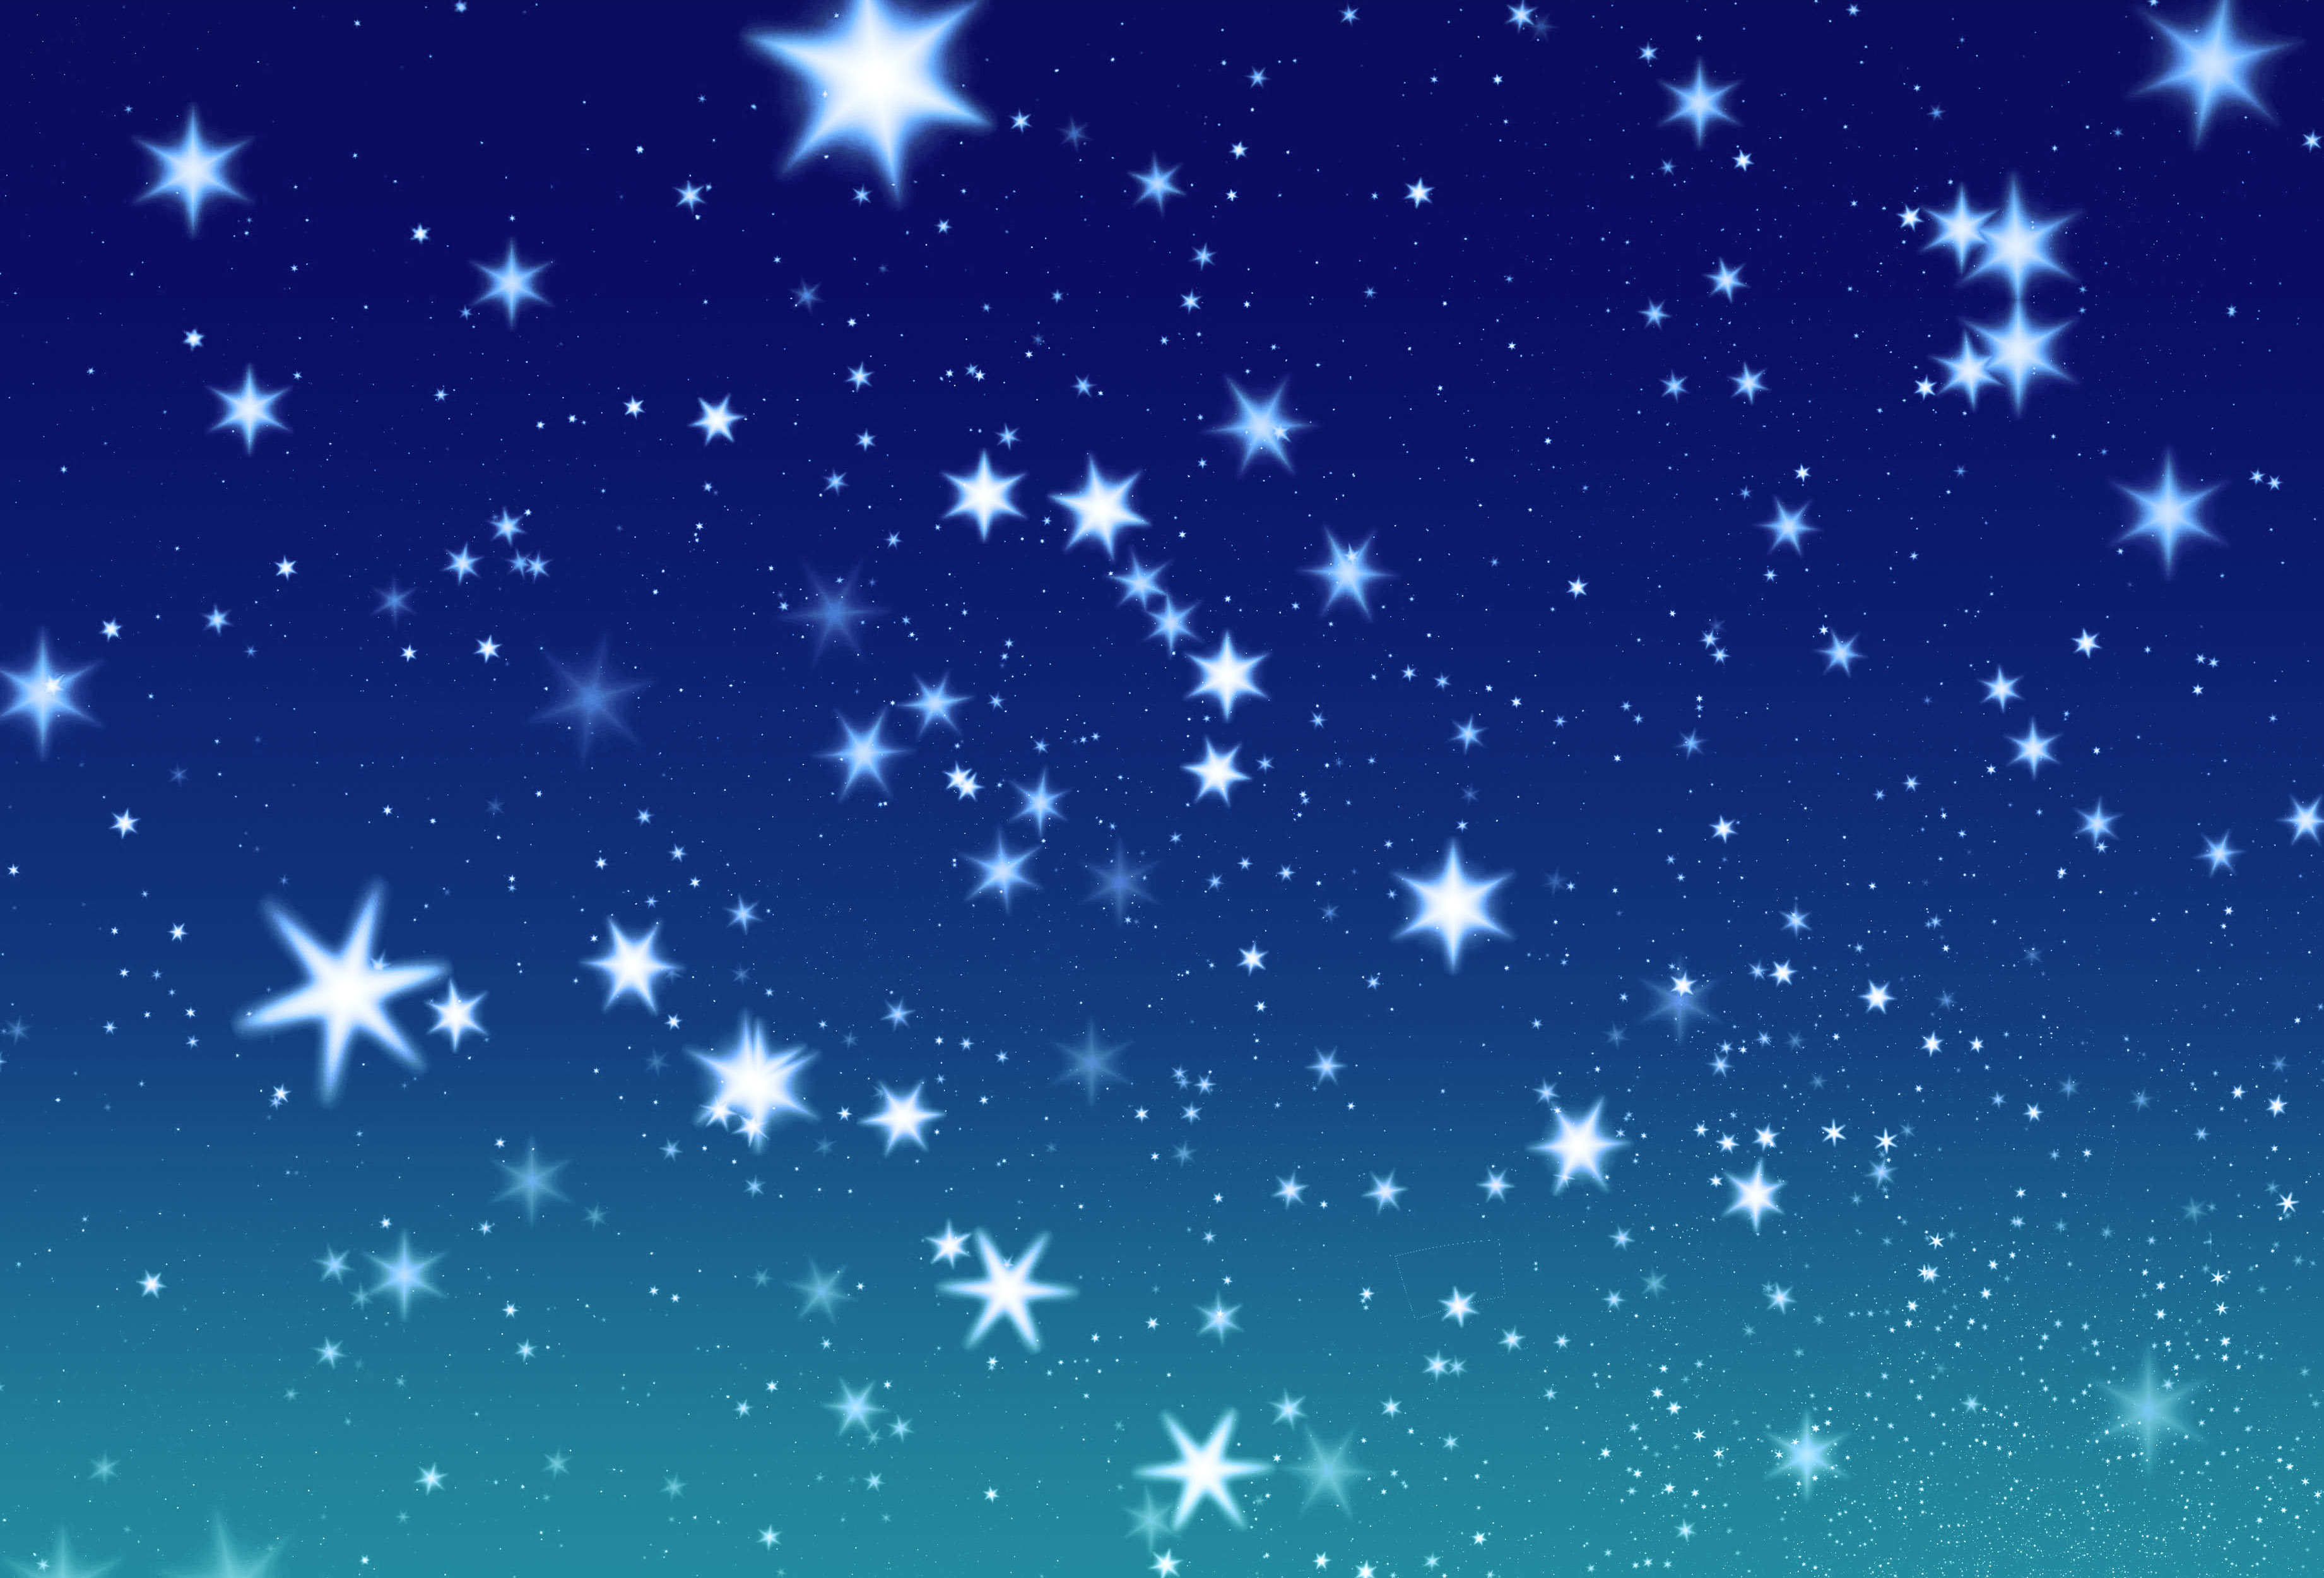 stars in the sky wallpaper hd